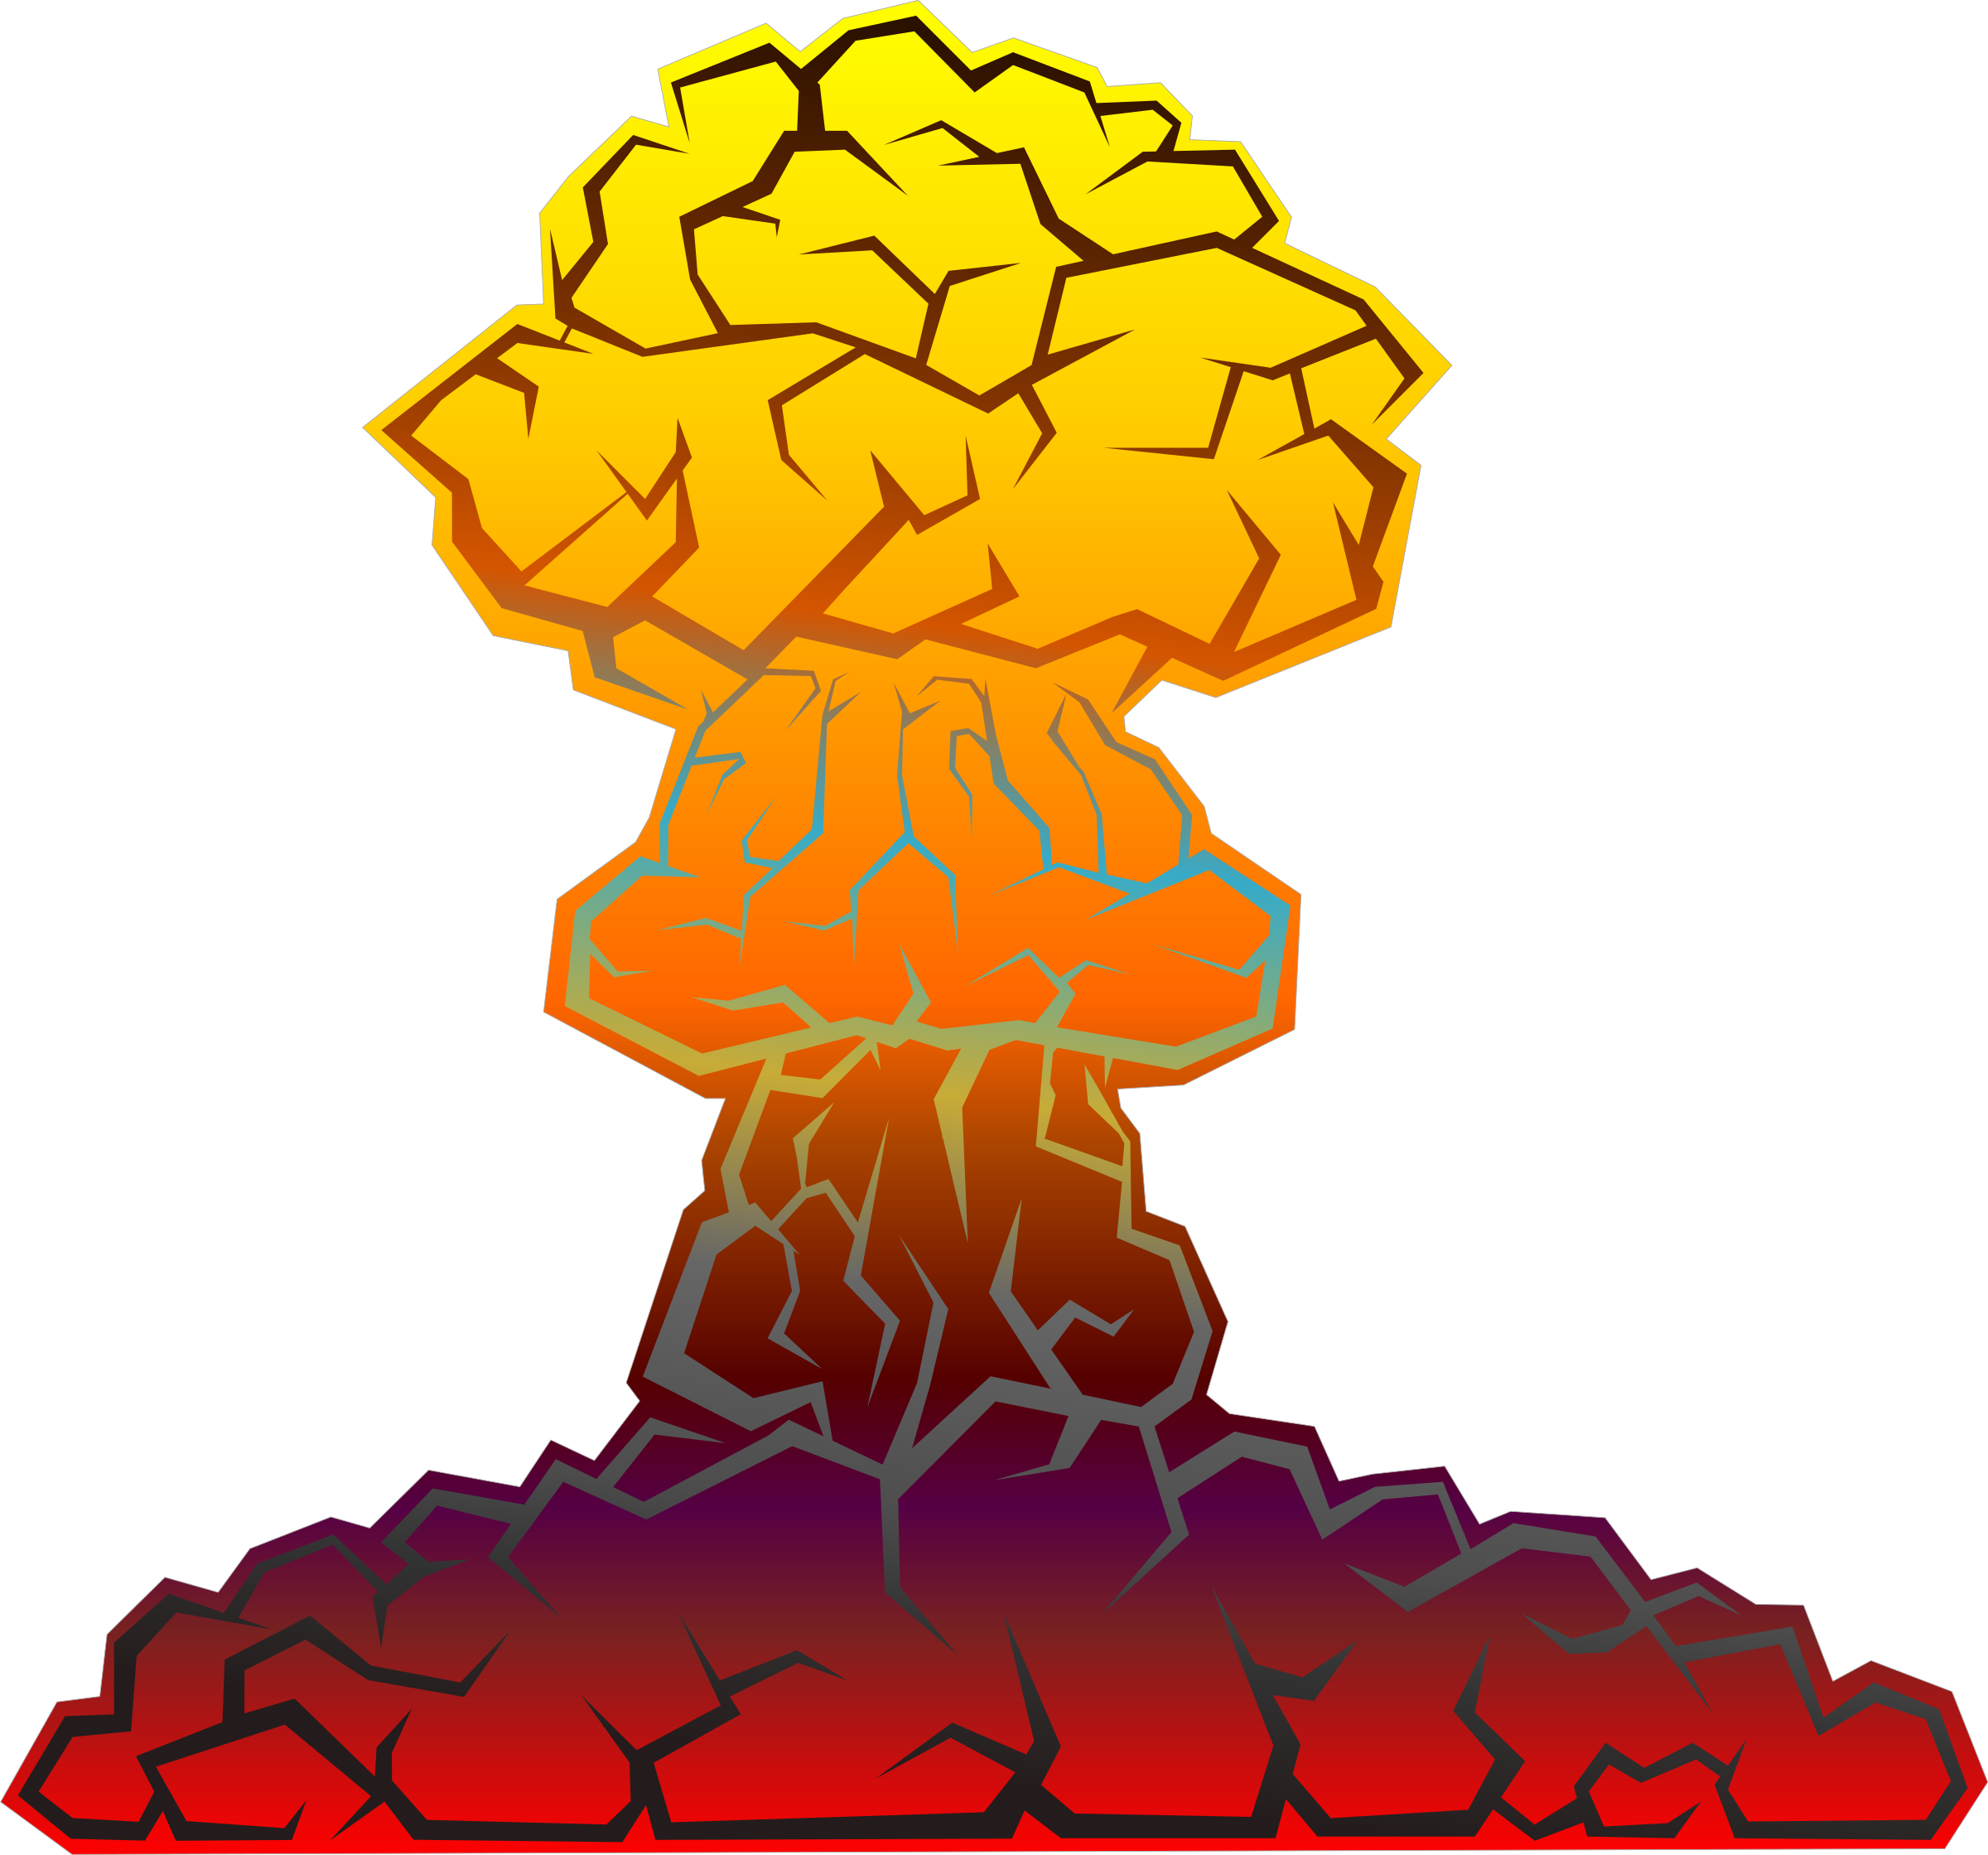 Mushrooms explosion